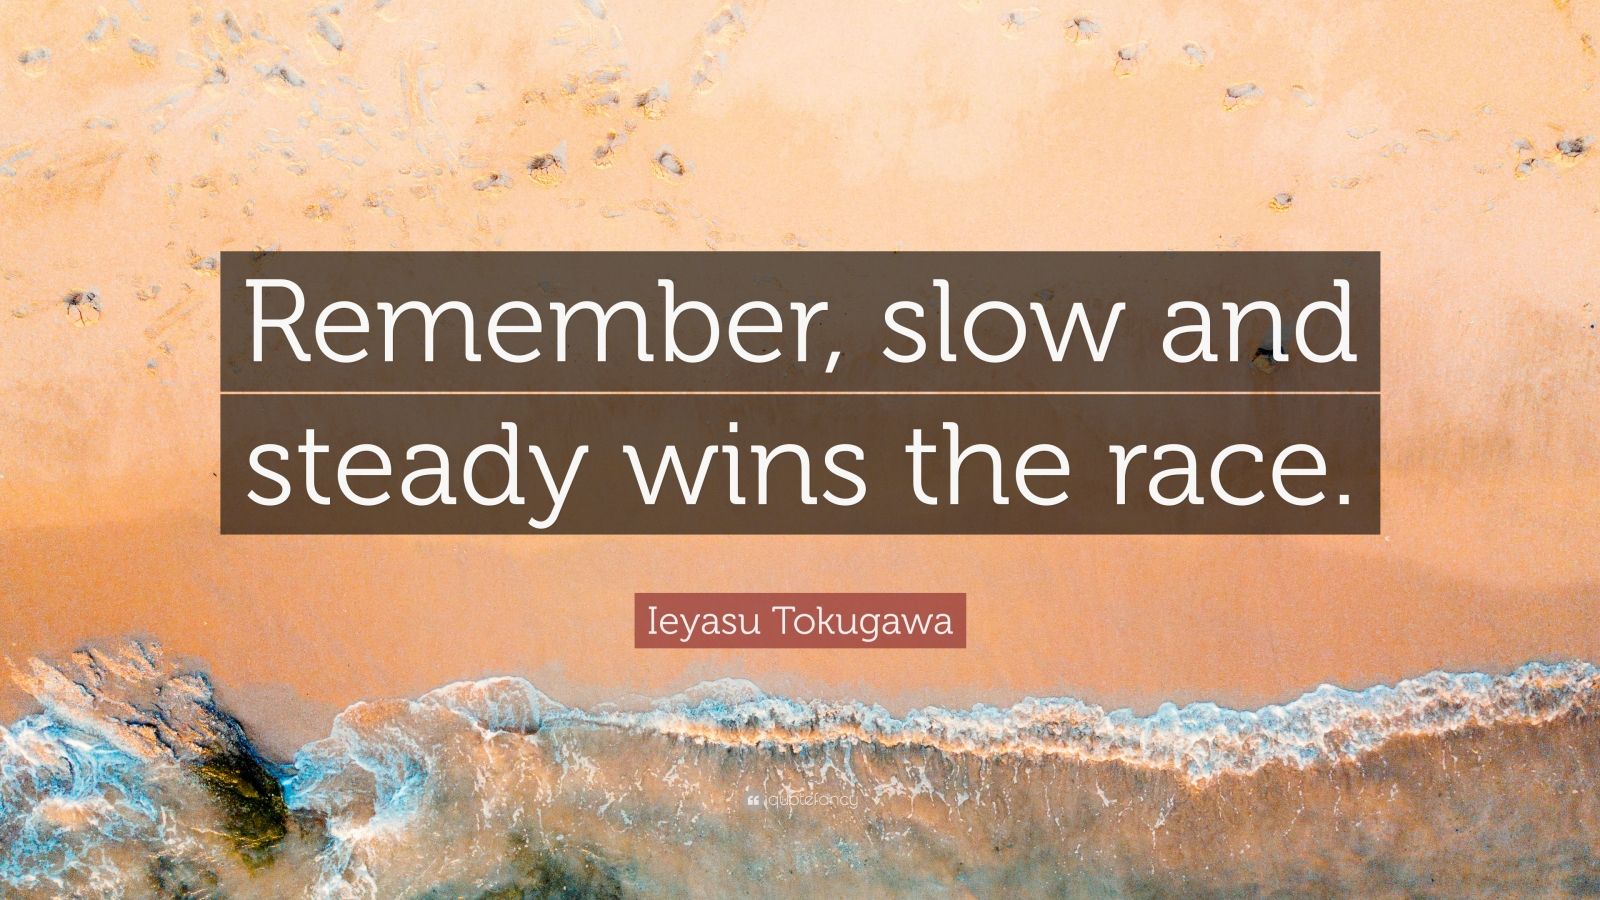 Ieyasu Tokugawa Quote: “Remember, slow and steady wins the race.” (12